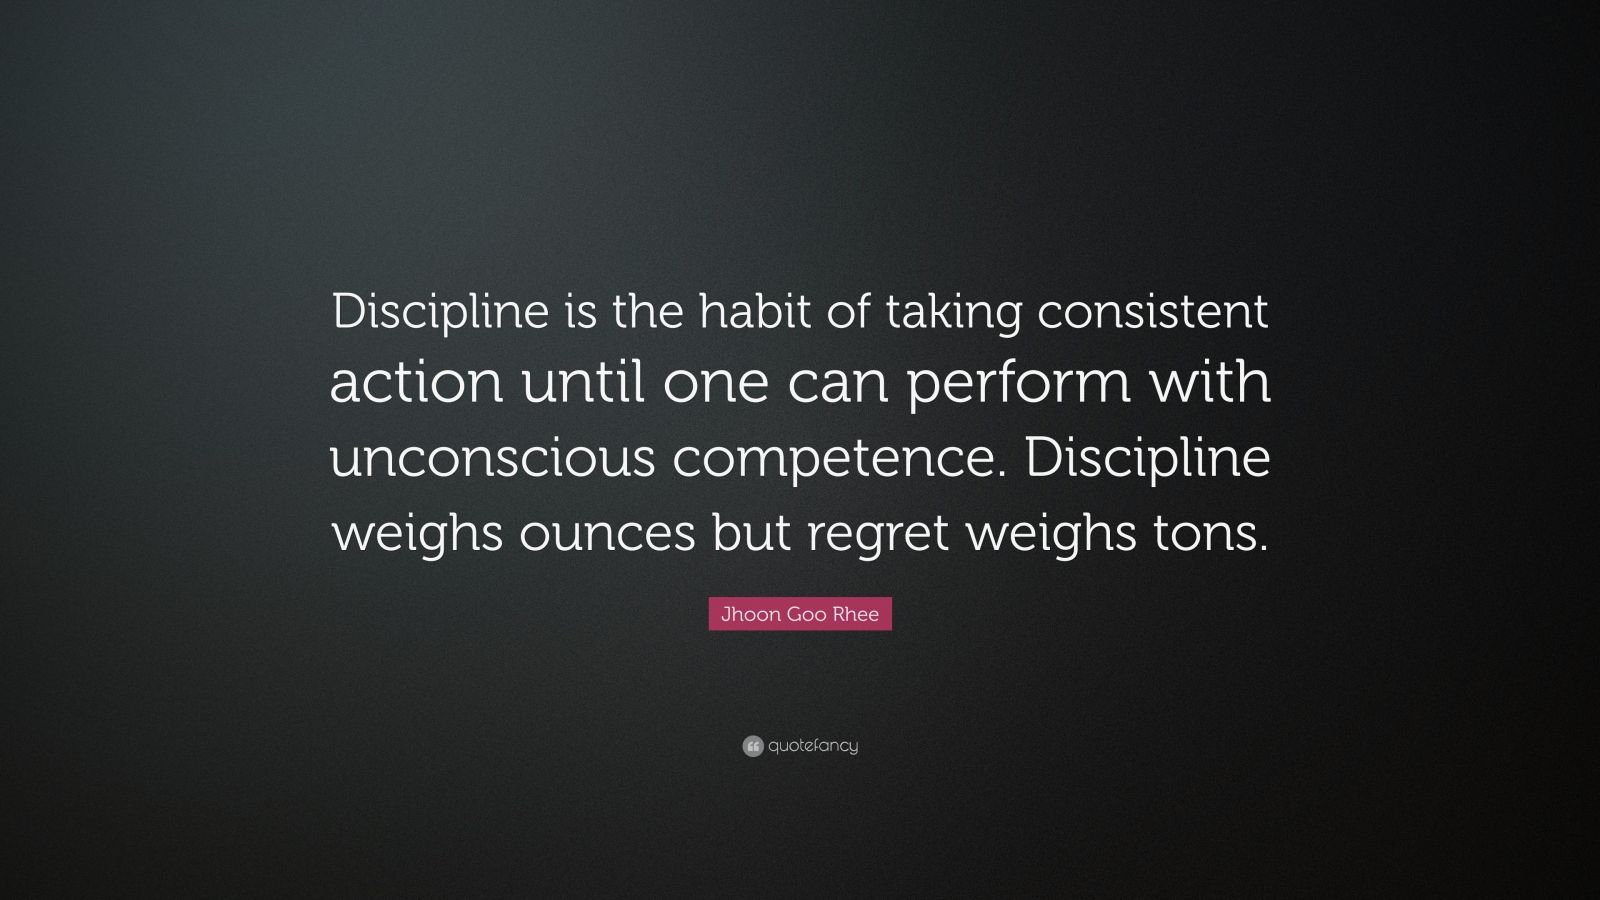 Jhoon Goo Rhee Quote: “Discipline is the habit of taking consistent ...